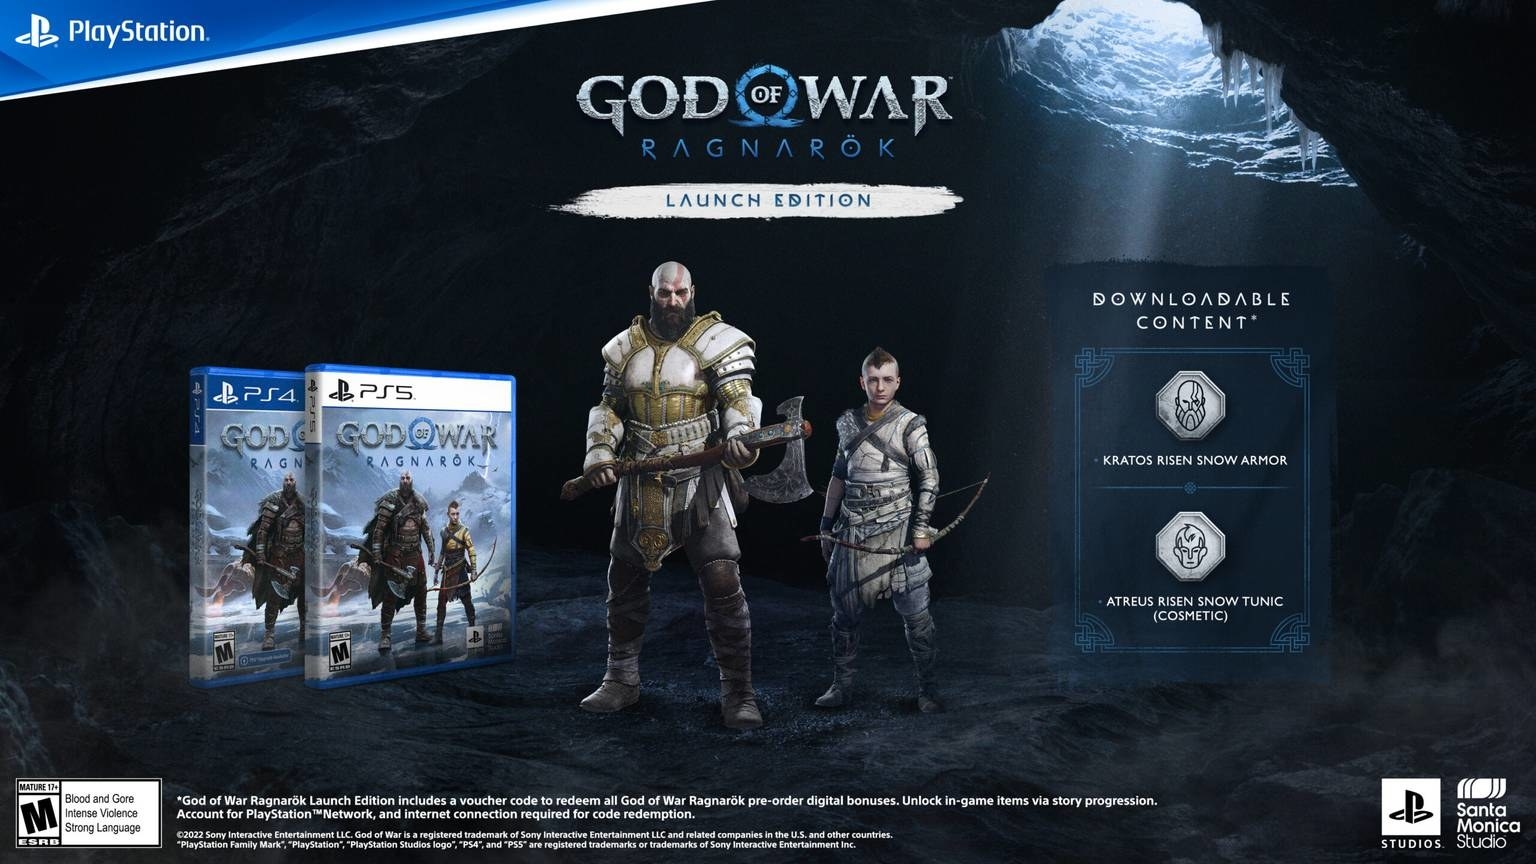 the god of war ragnarok launch edition and preorder bonuses